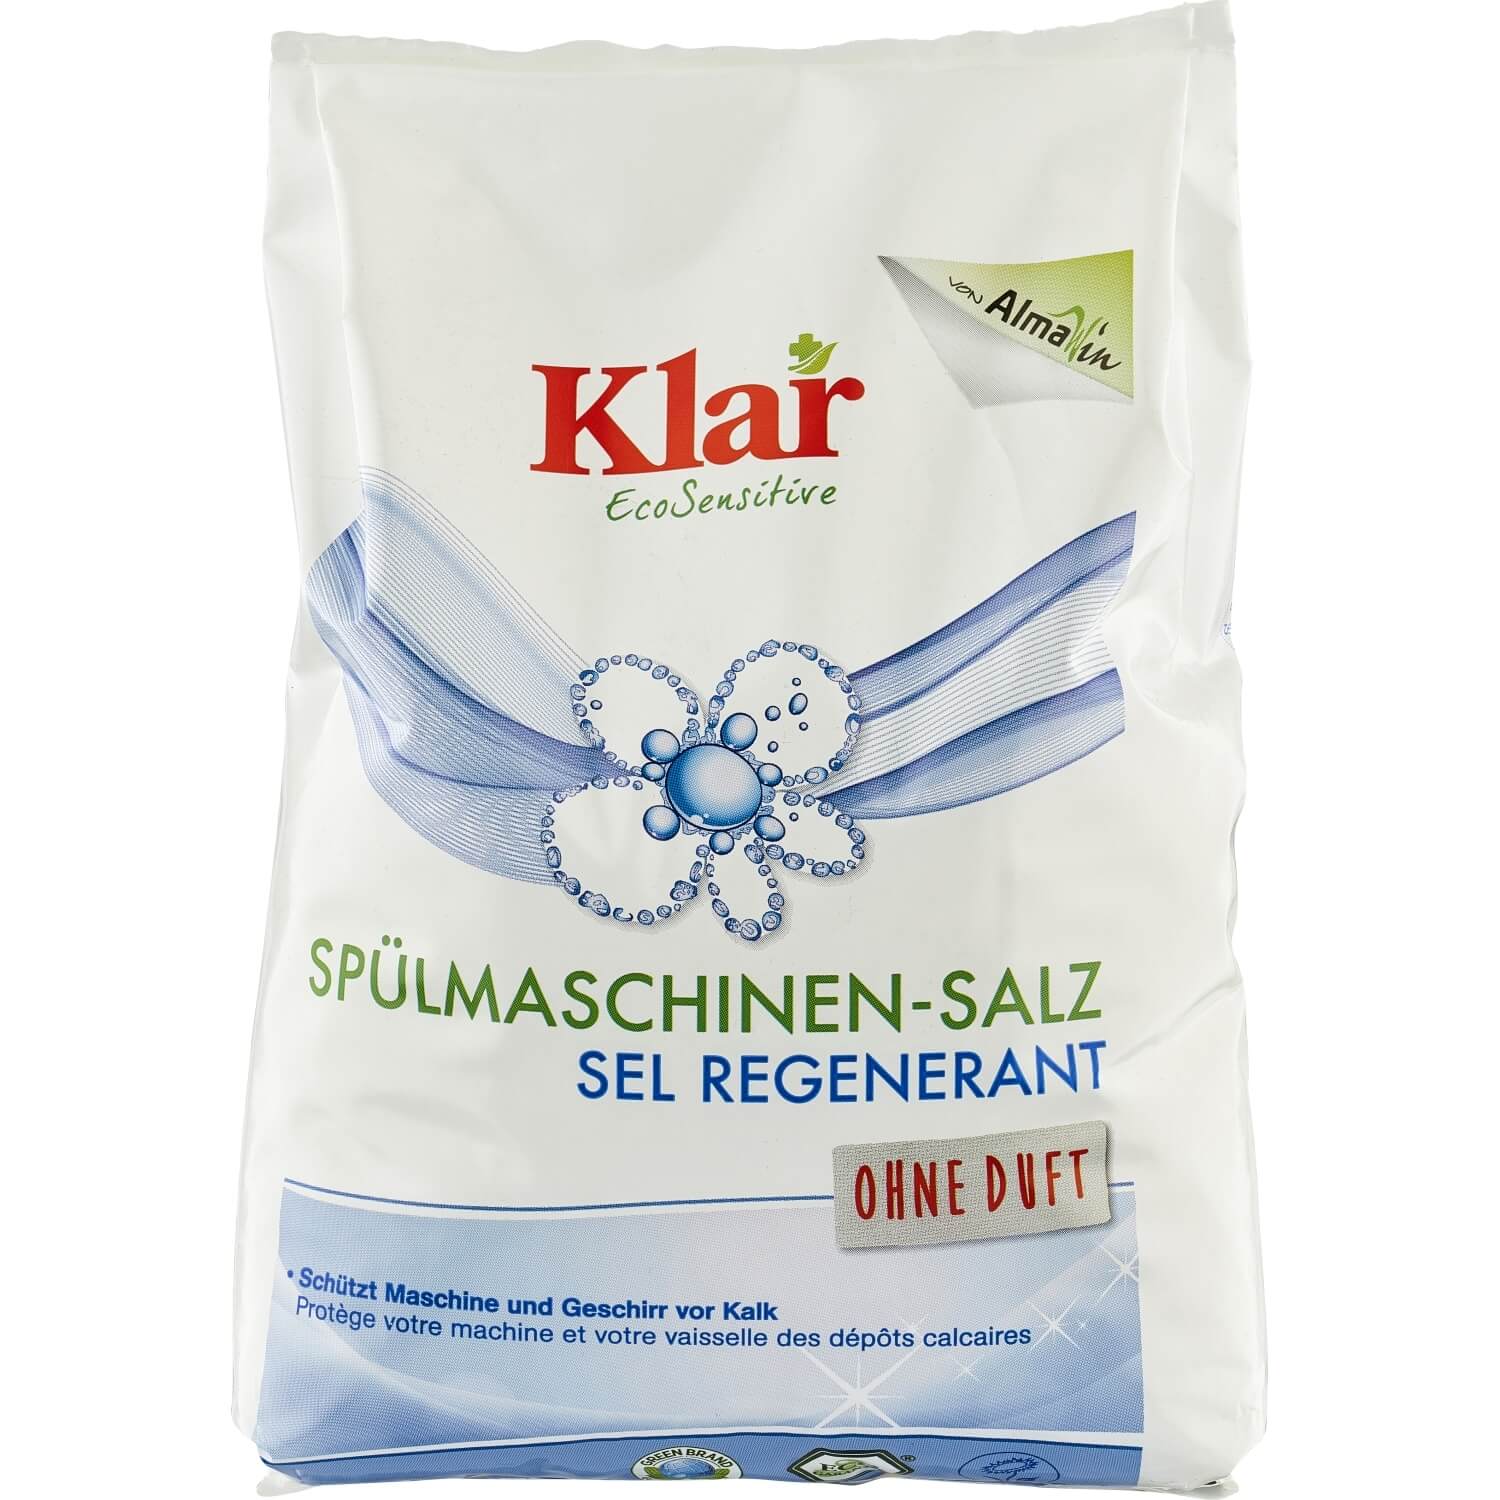 Klar Spülmaschinen-Salz, 2 kg